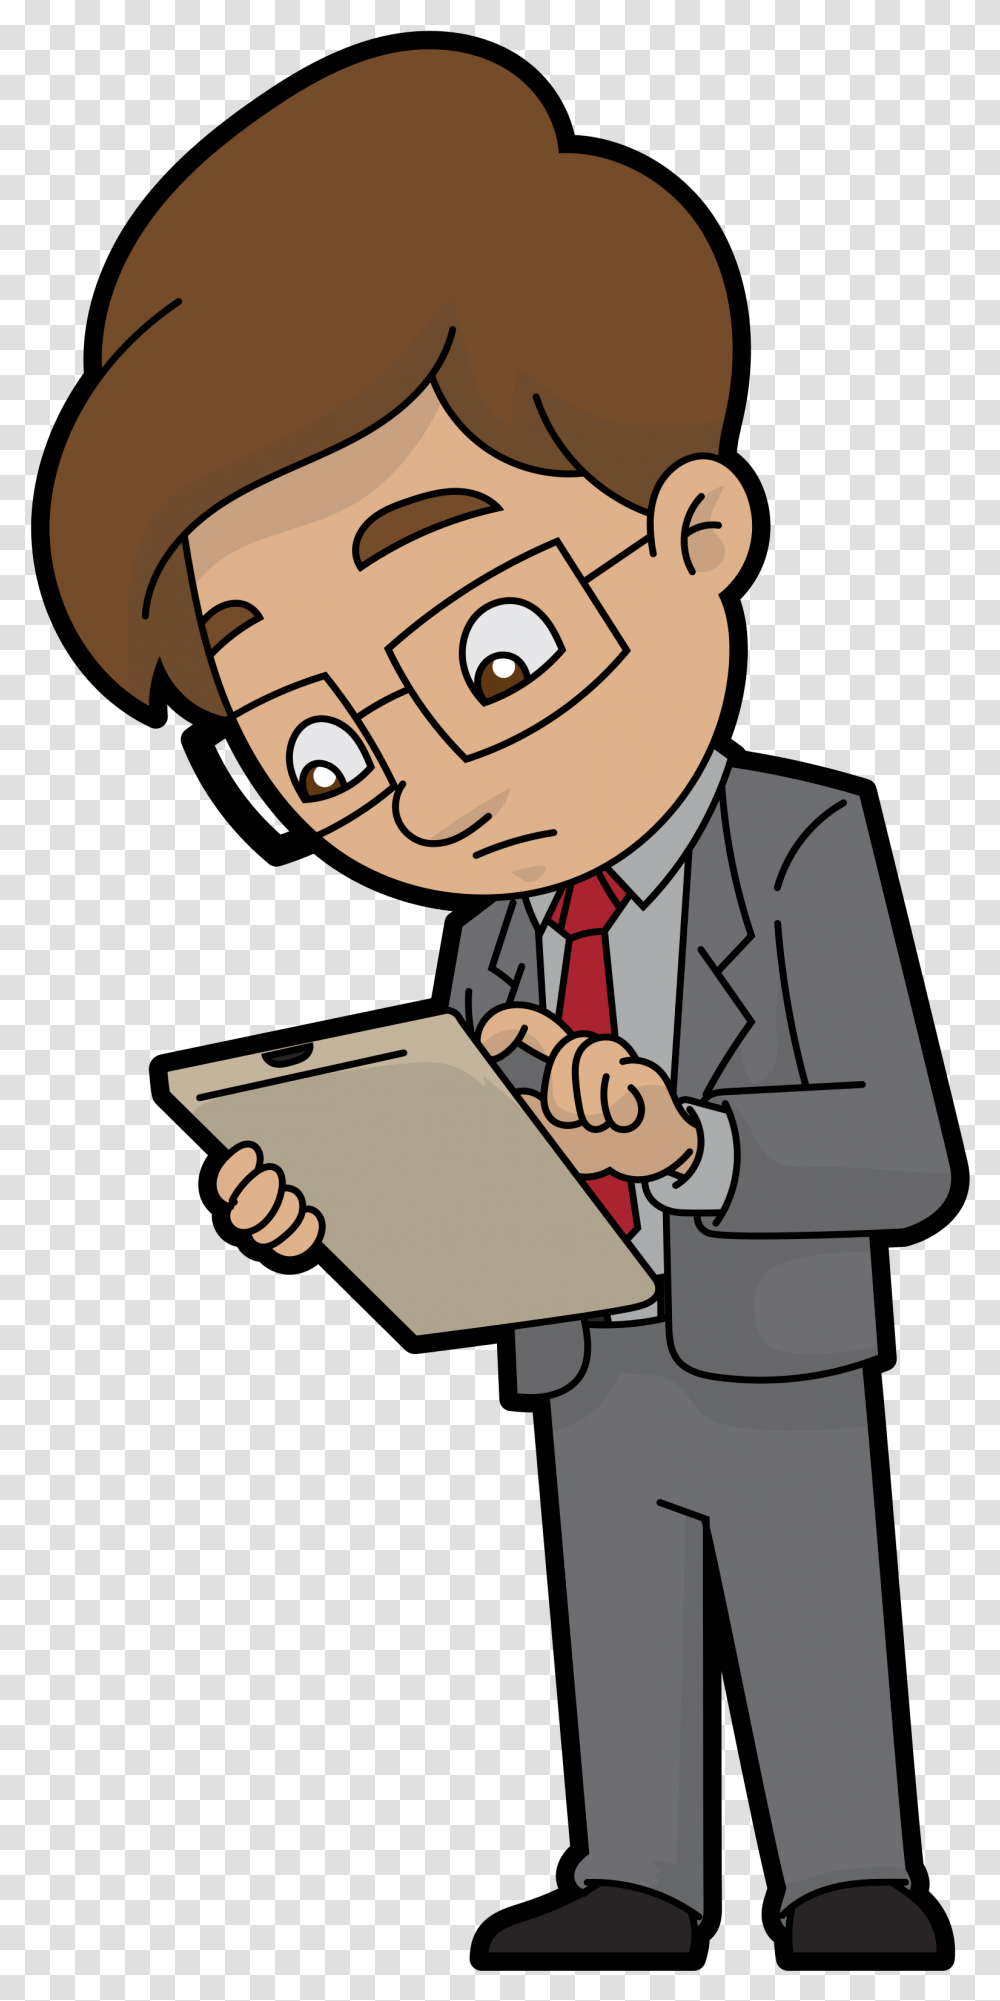 Clipart Library Library File A Curious Cartoon Cartoon Businessman Man, Person, Human, Reading, Box Transparent Png